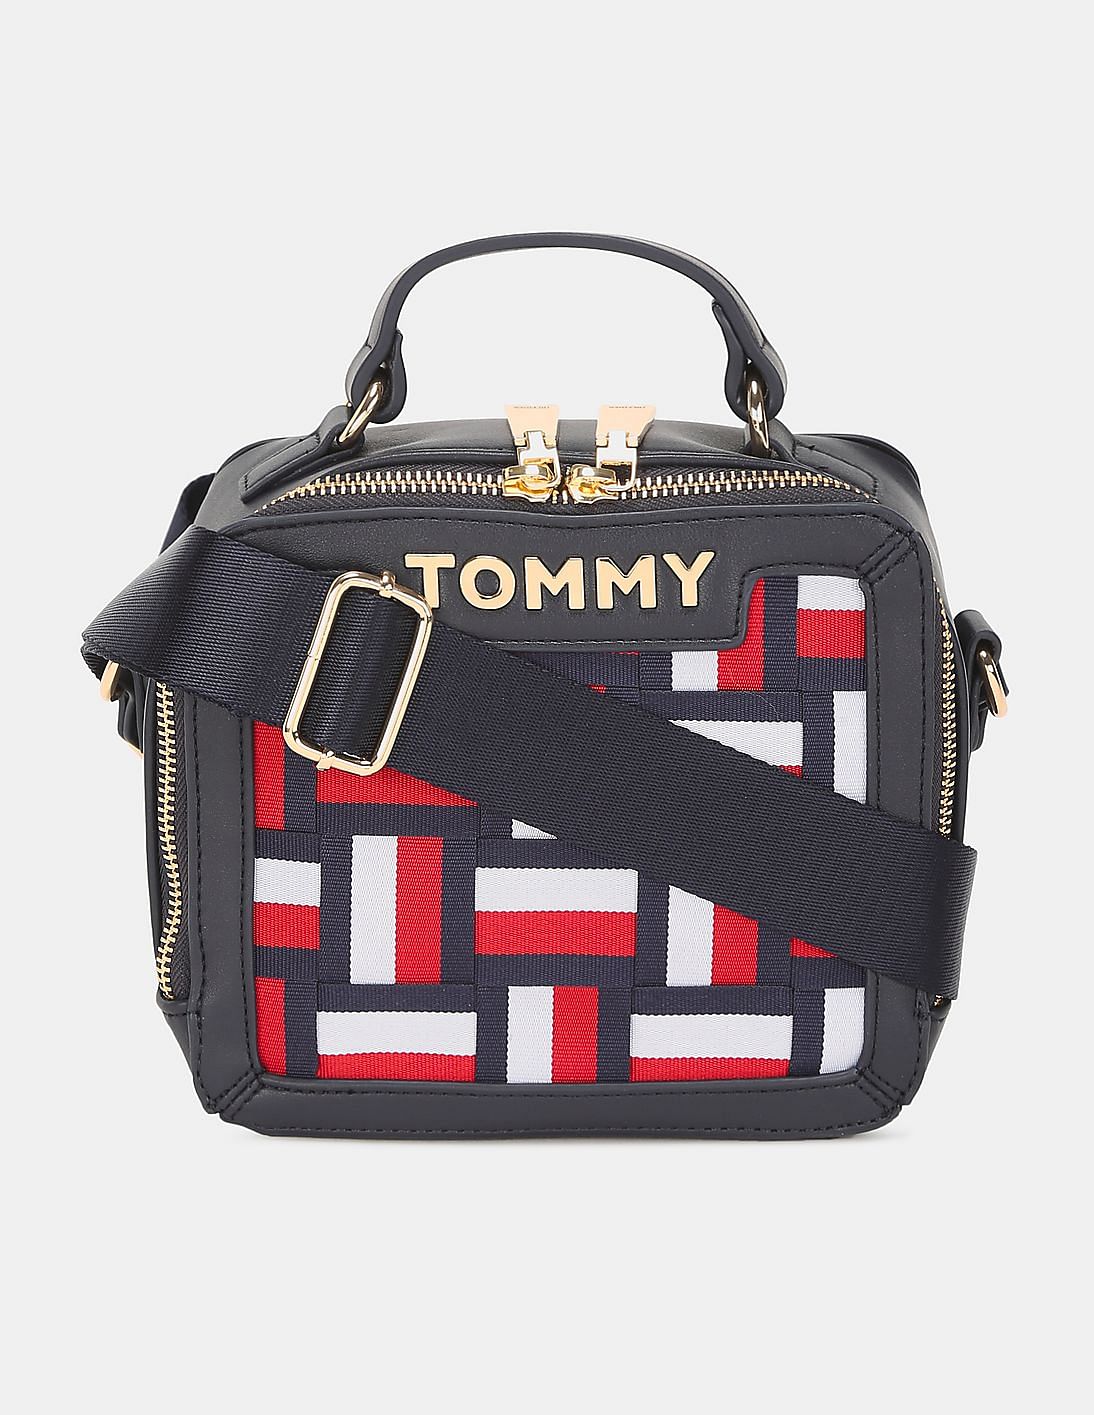 cheap tommy hilfiger purses